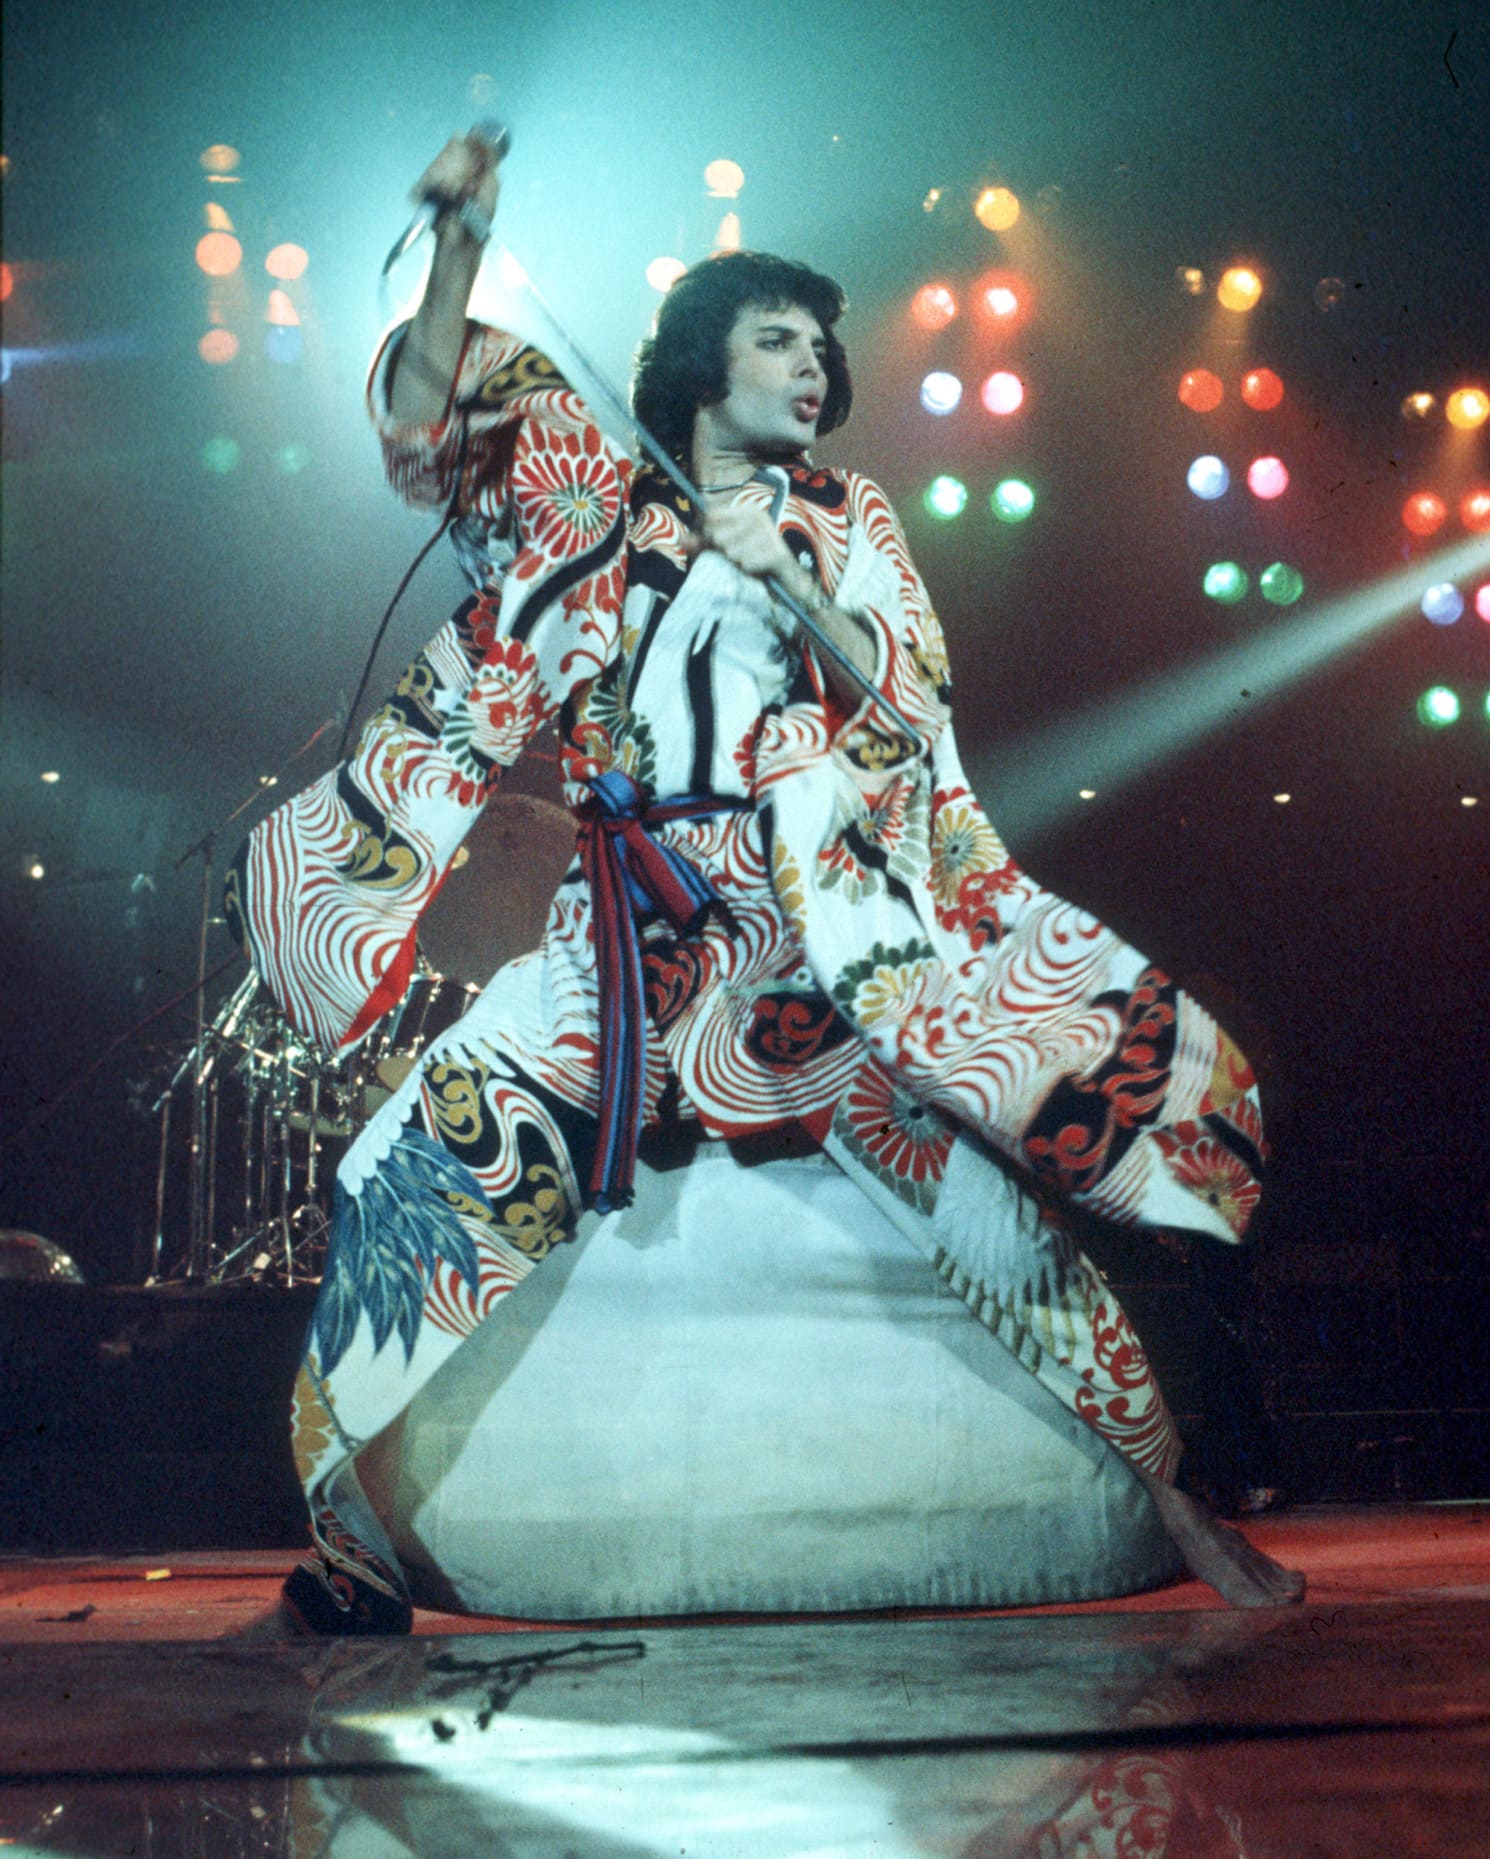 Freddie Mercury 在日本之旅中穿著和服